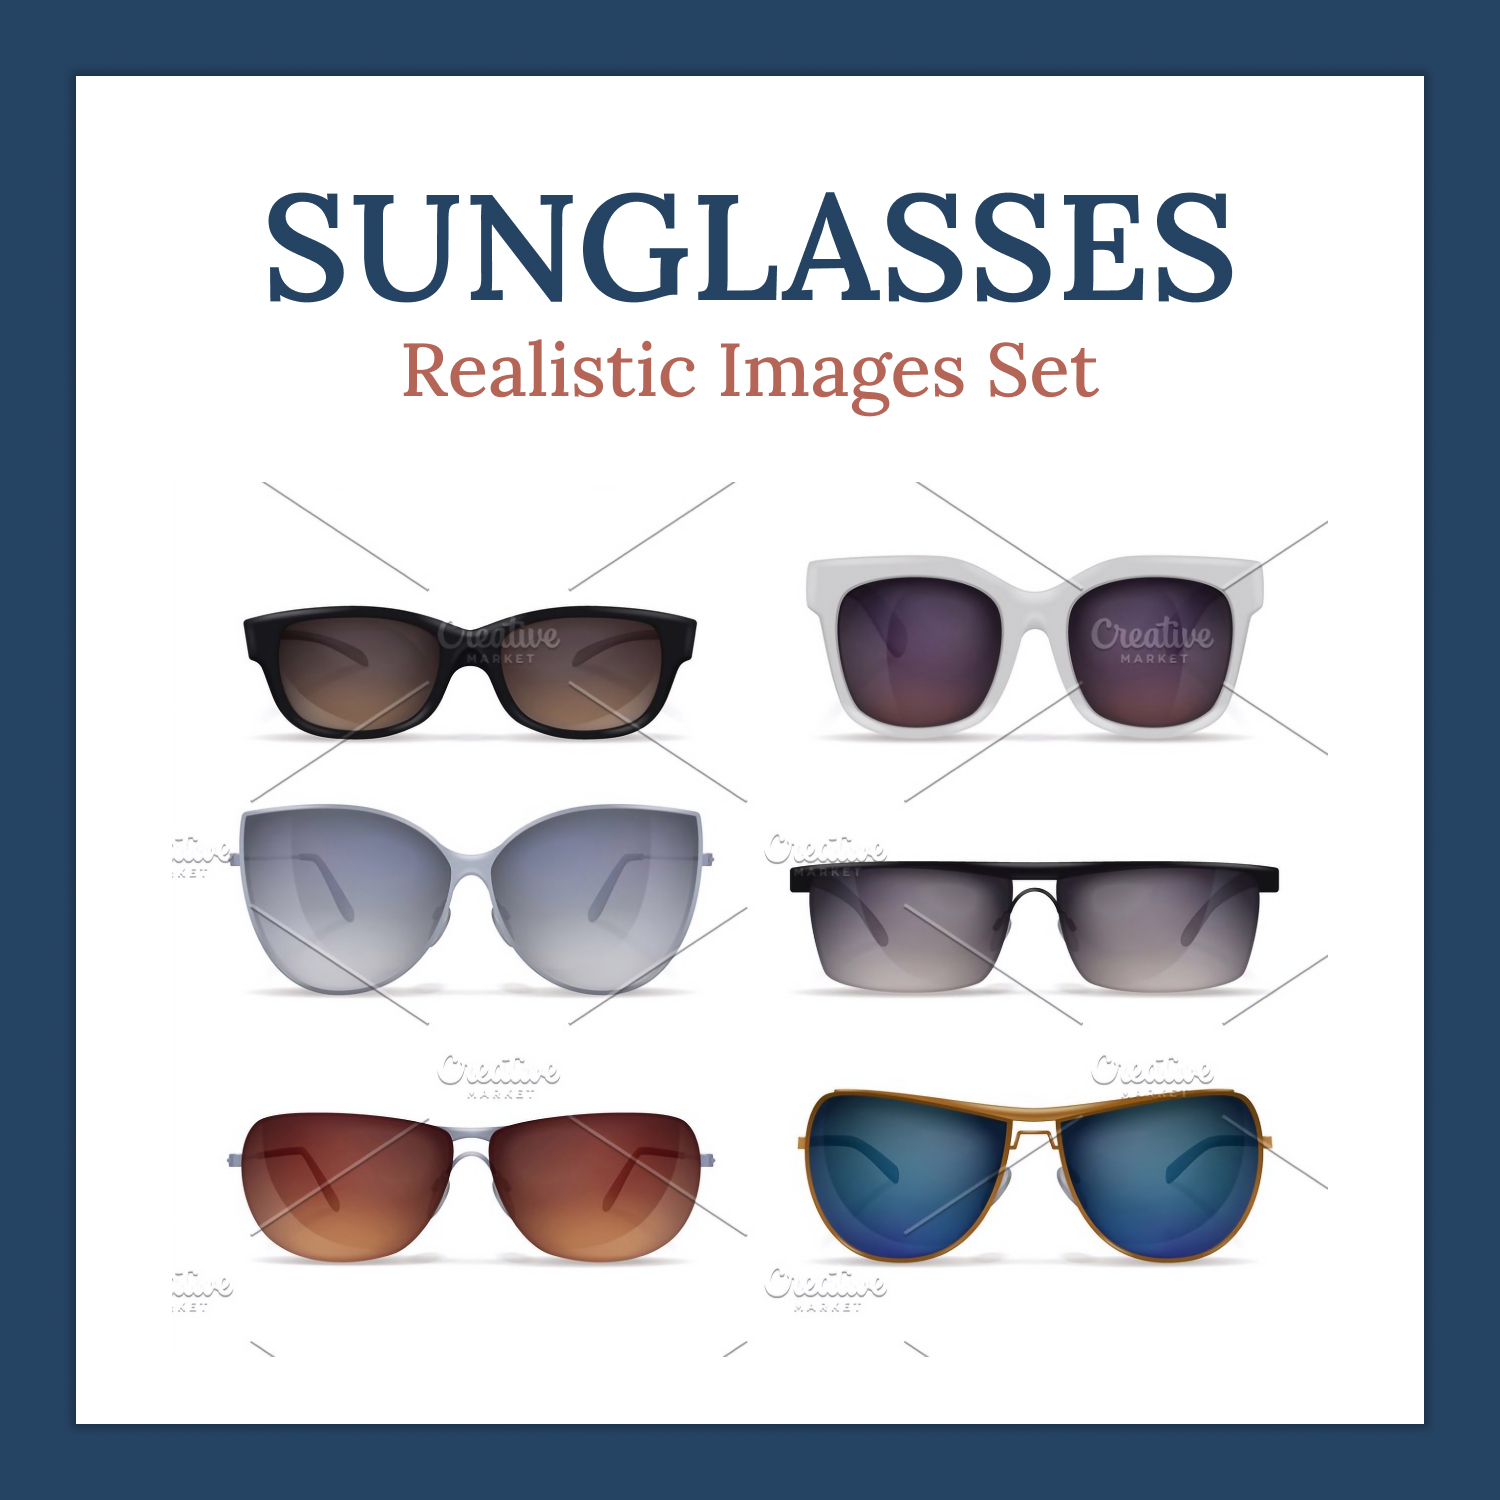 Sunglasses Realistic Images Set Main Cover.